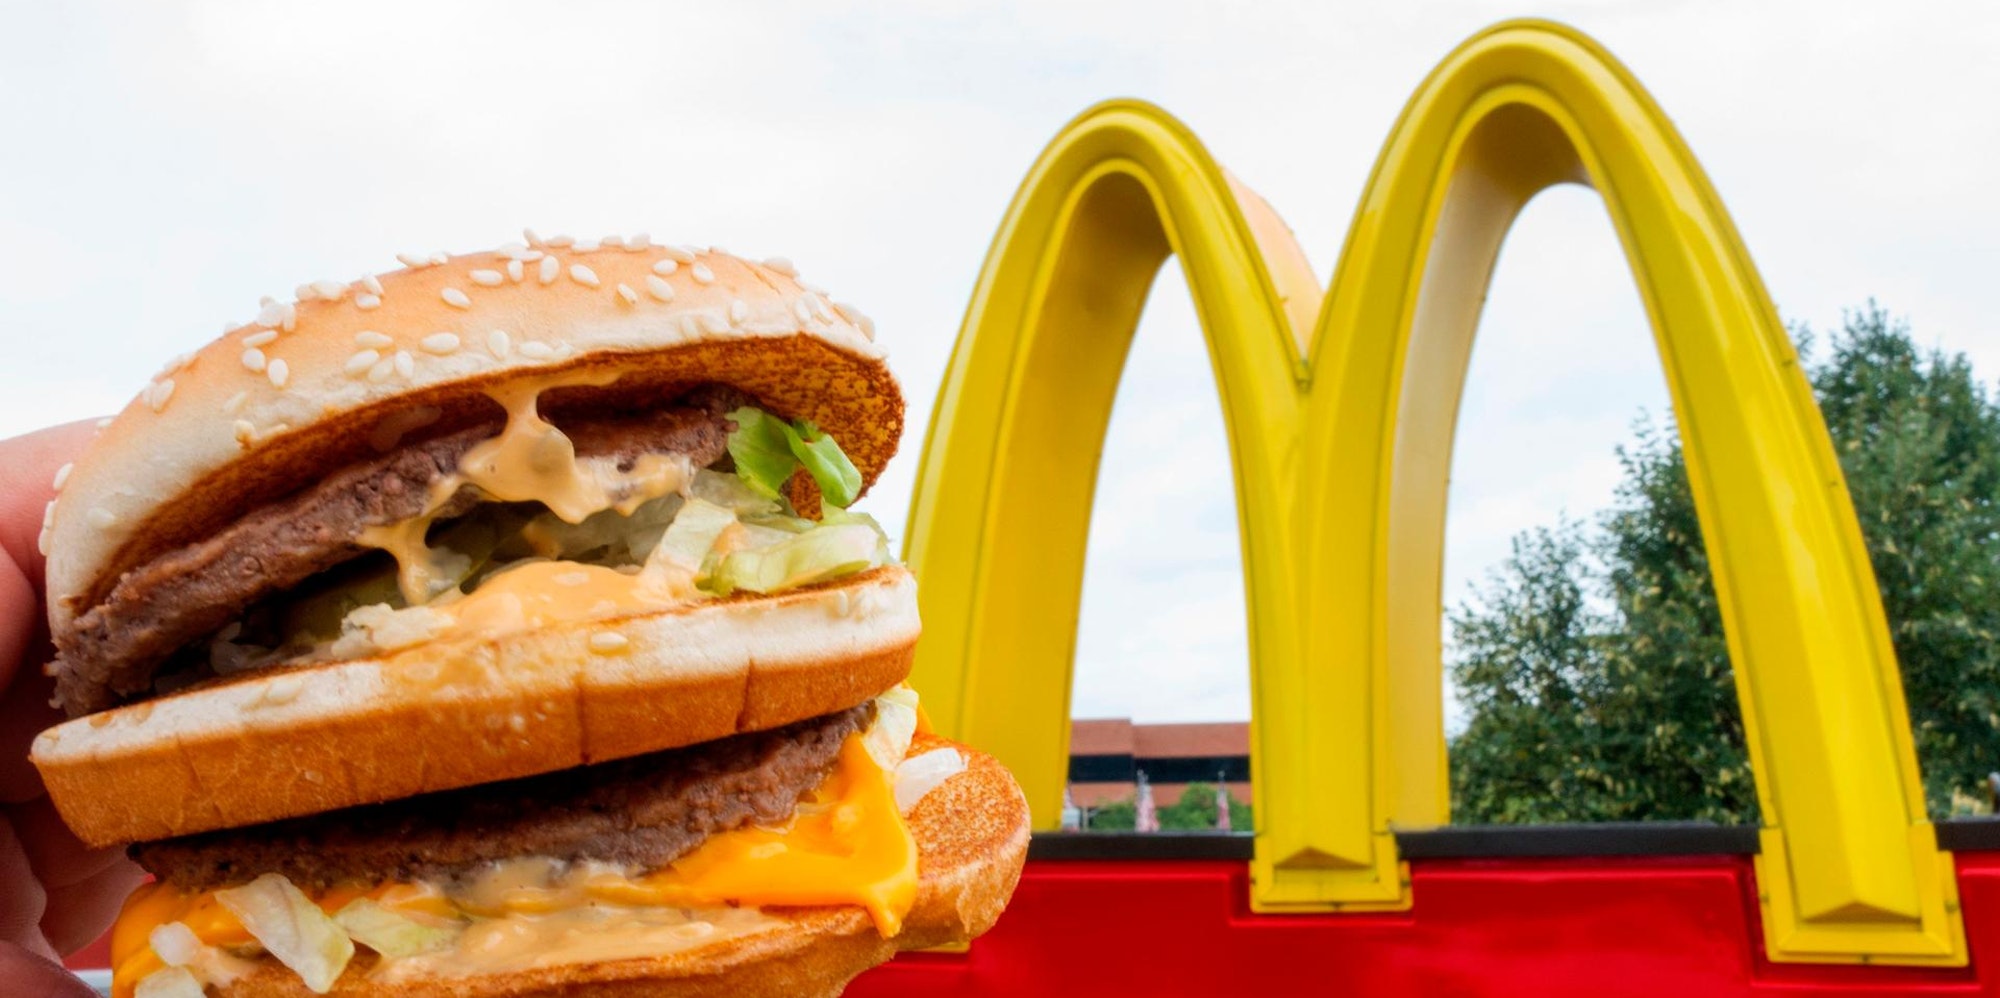 McDonald's Burger